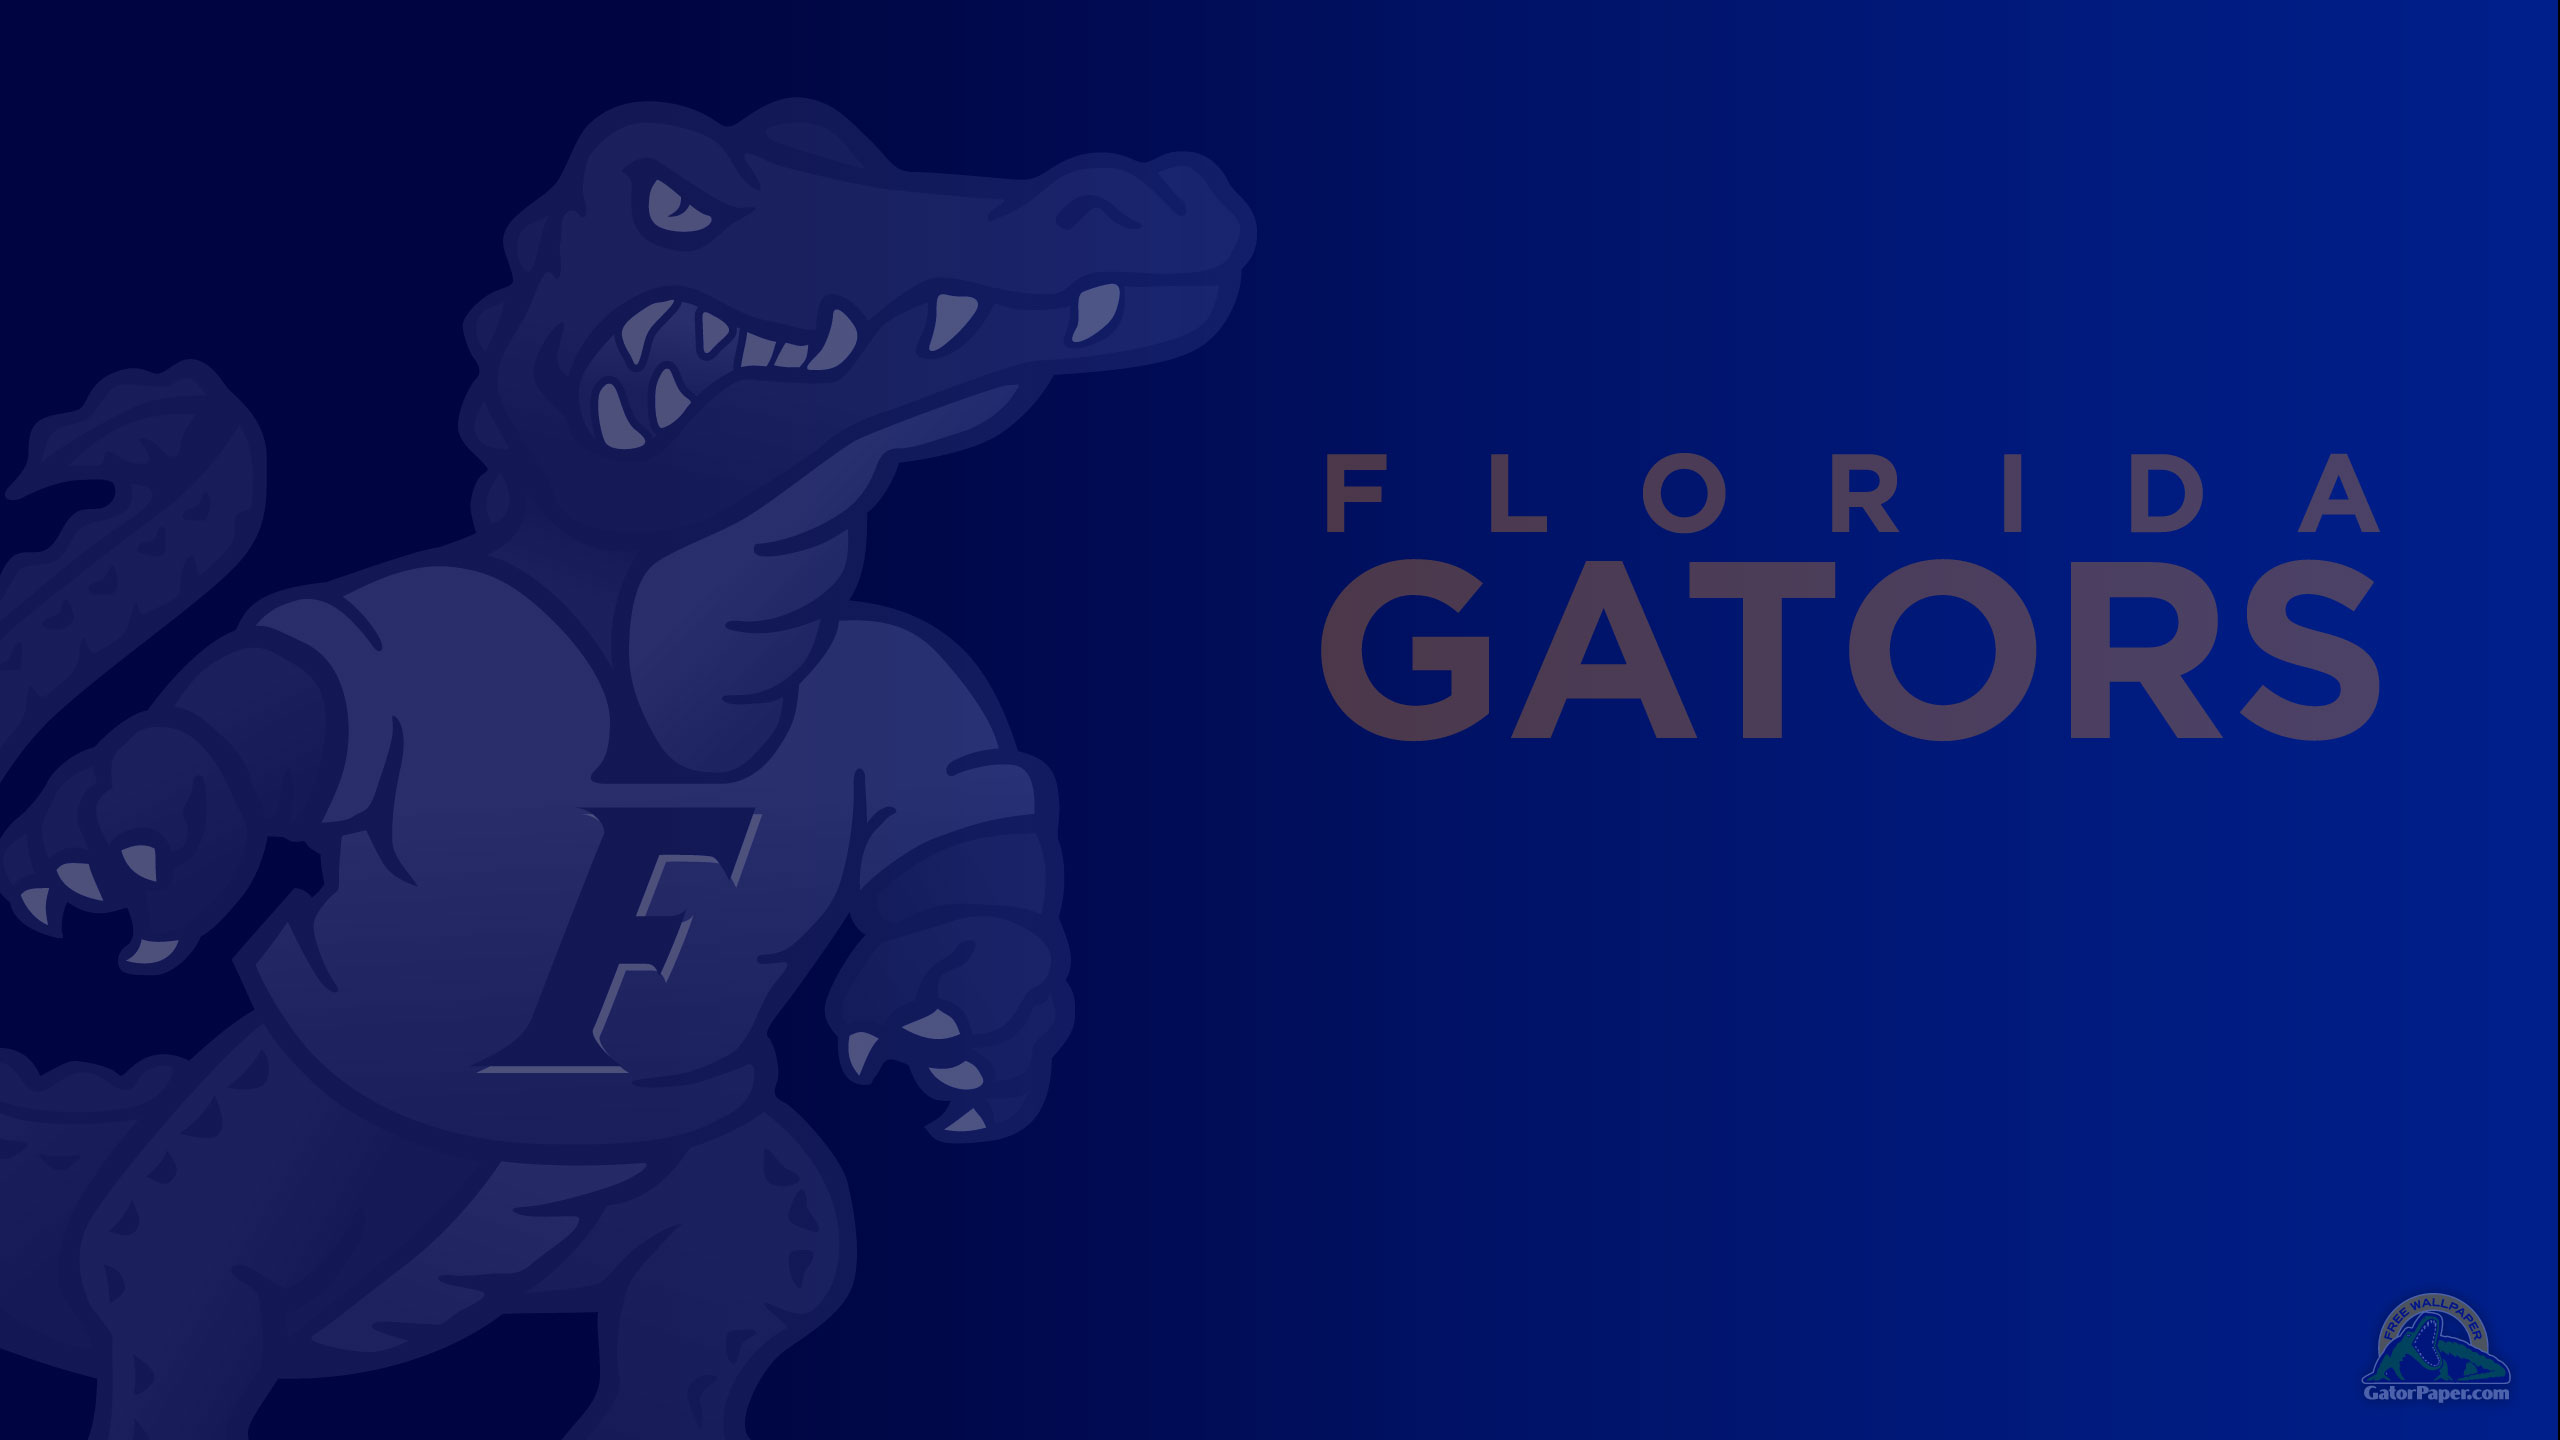 Read More Florida Gators Dark Blue Wallpaper By Gatorpaper